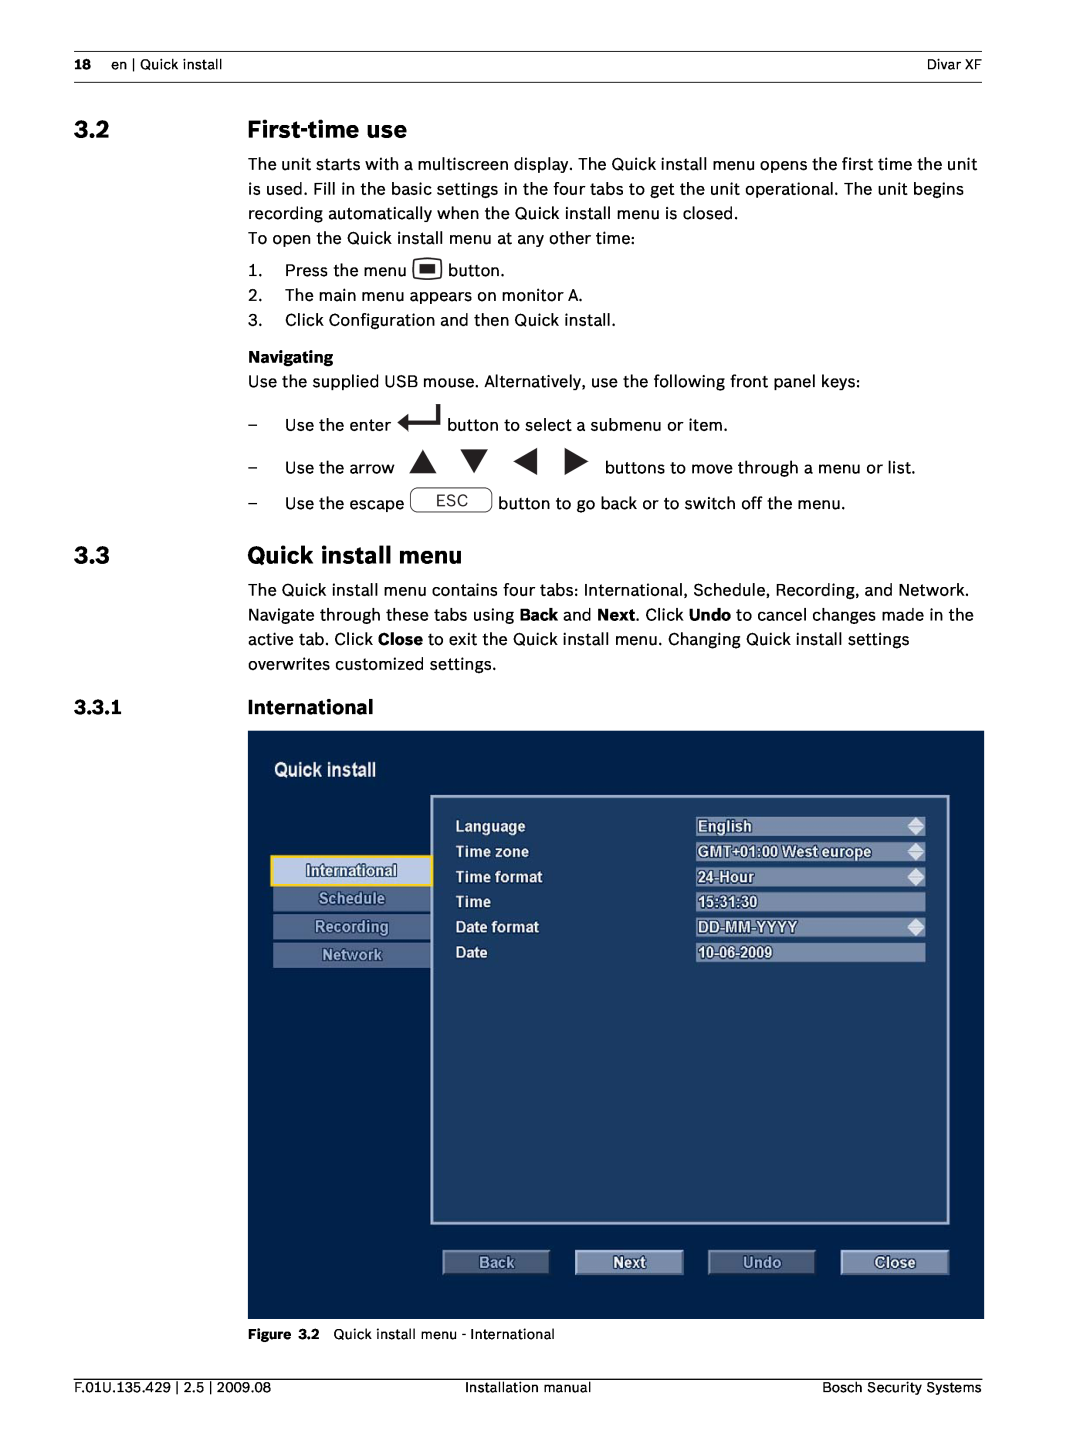 Bosch Appliances XF installation manual First-timeuse, Quick install menu, 3.3.1, International, Navigating 